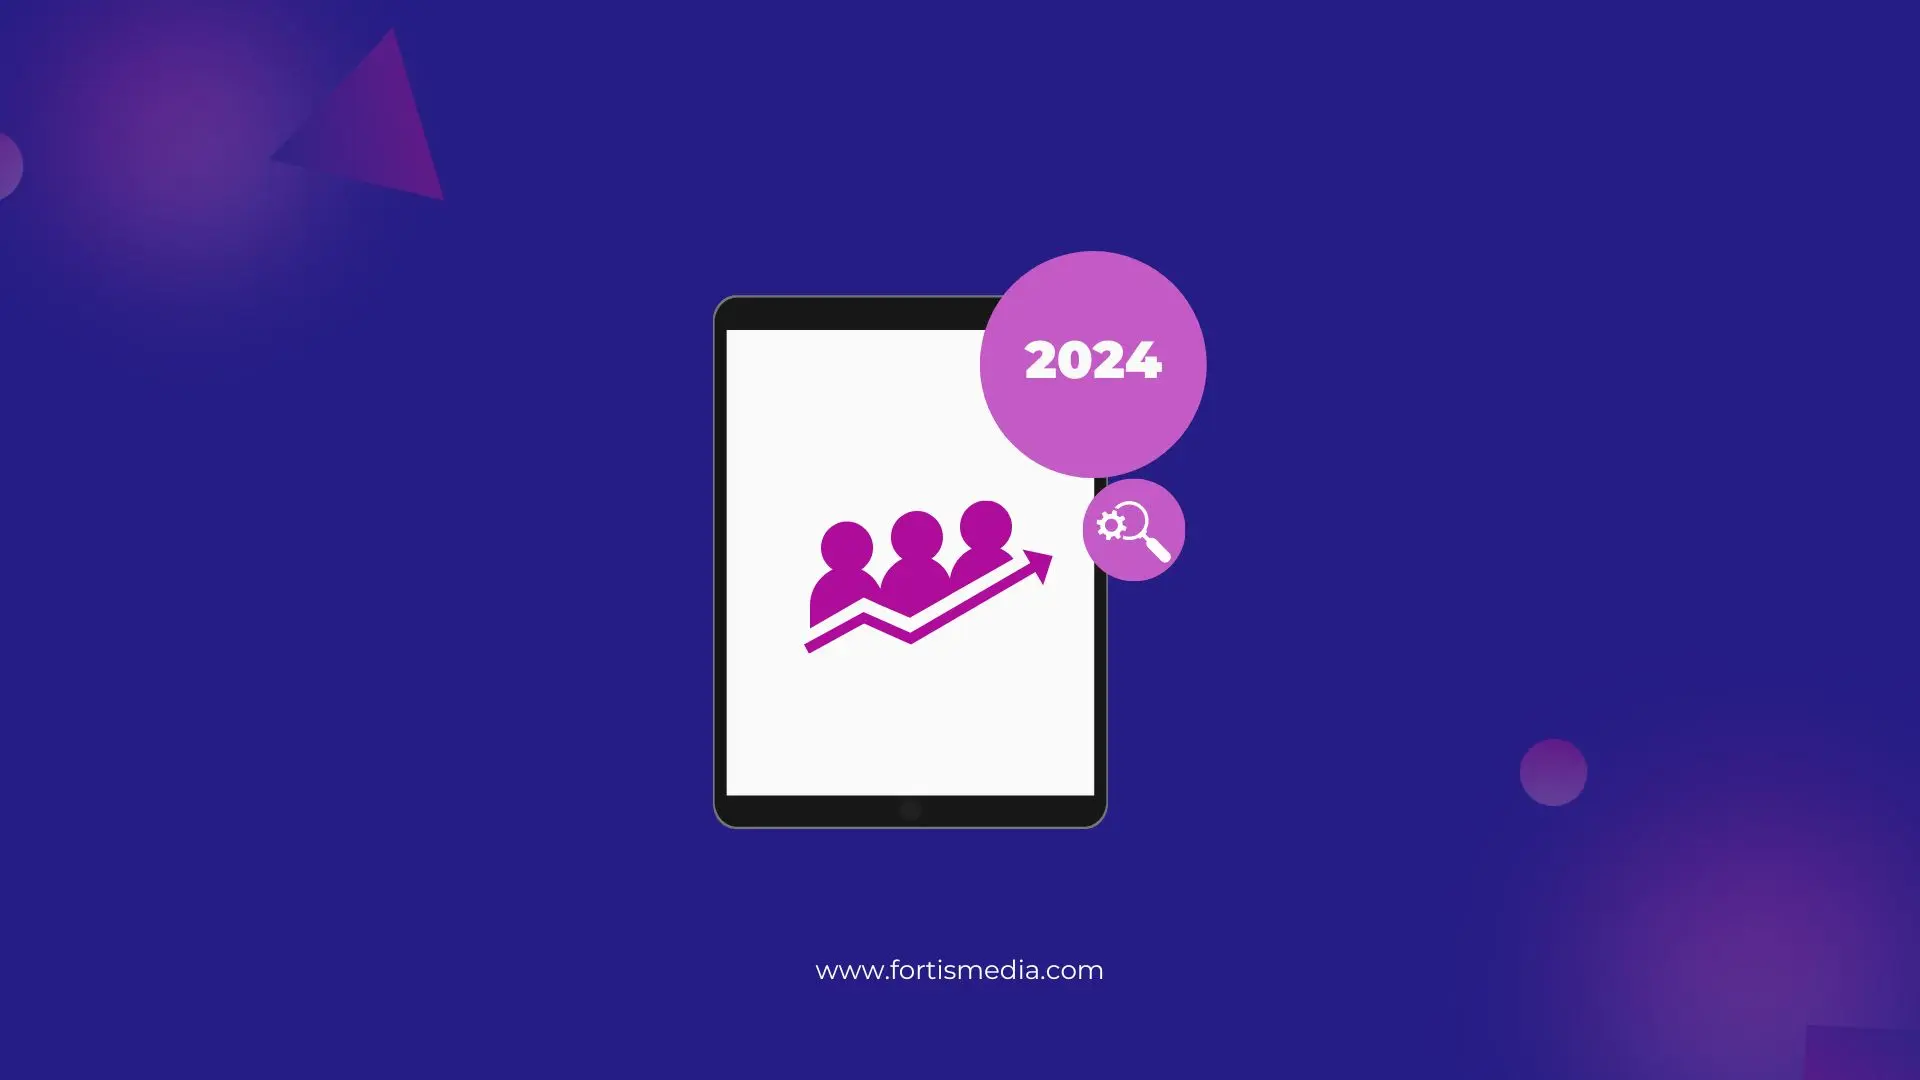 Demand Generation Marketing in 2024